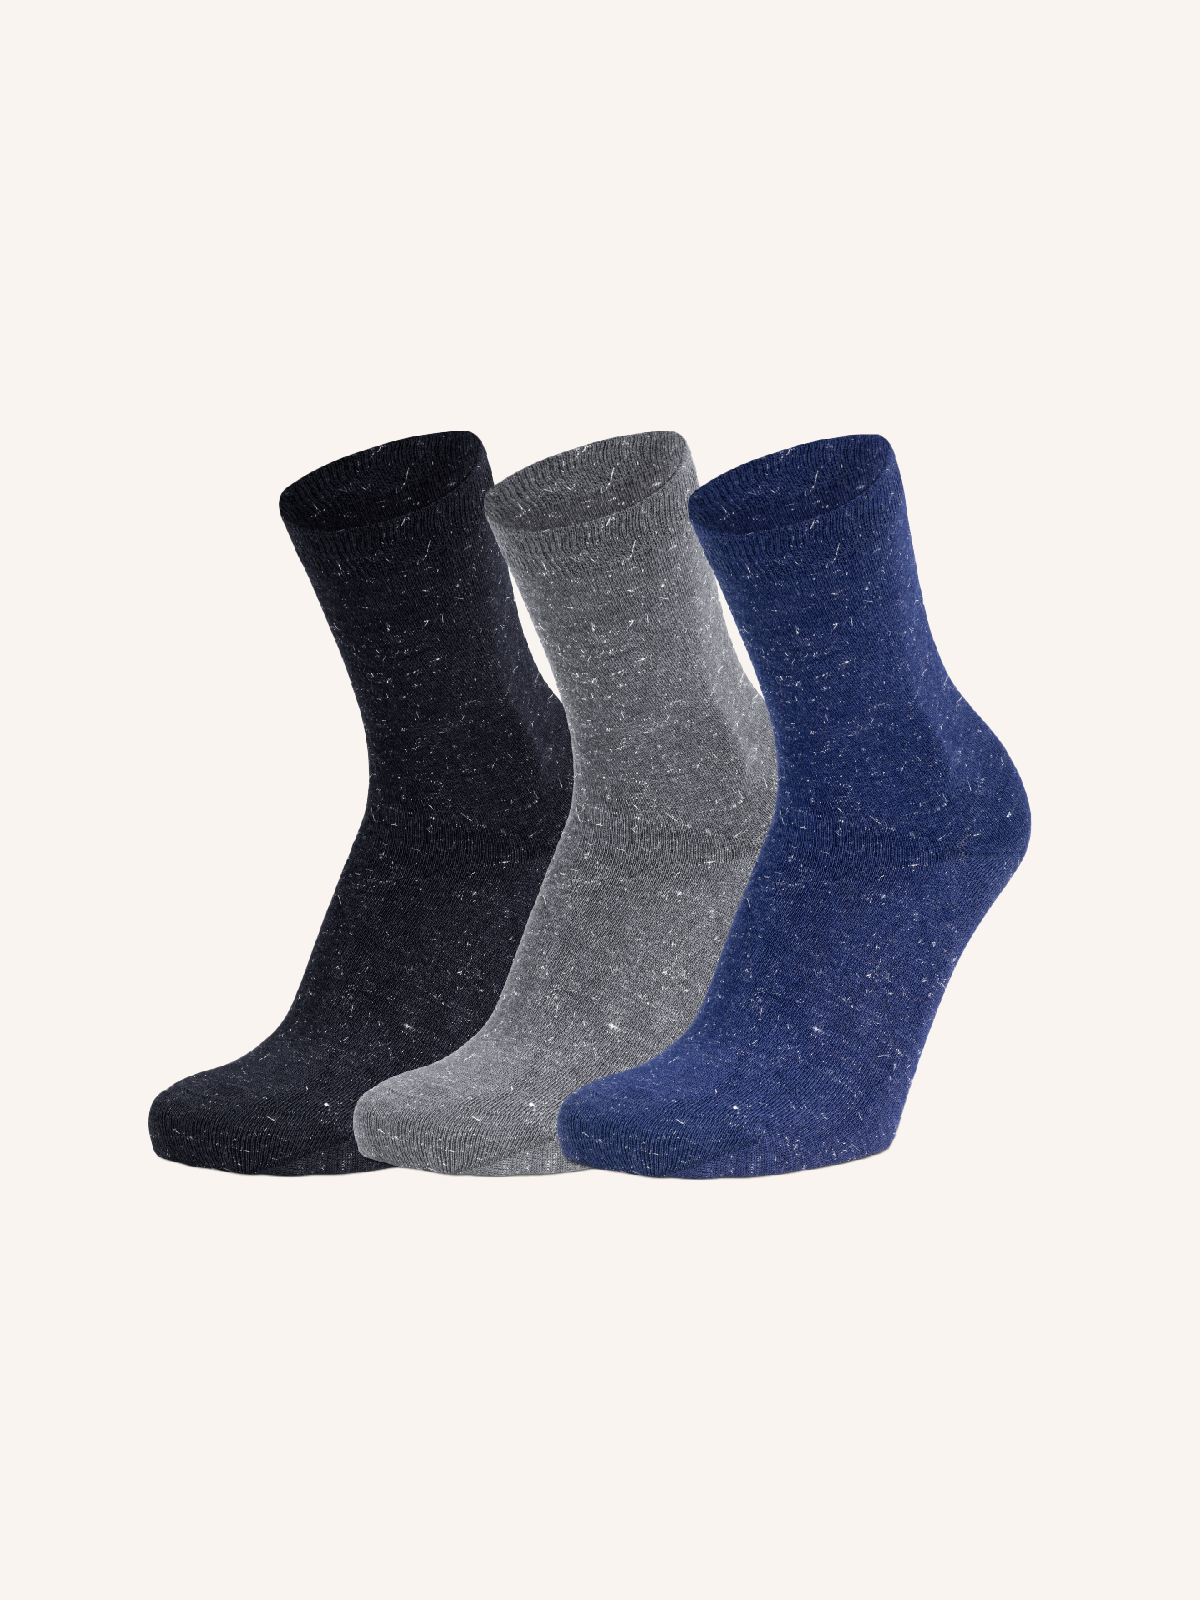 Short Viscose Socks for Women | Fantasy | Pack of 3 Pairs | Star